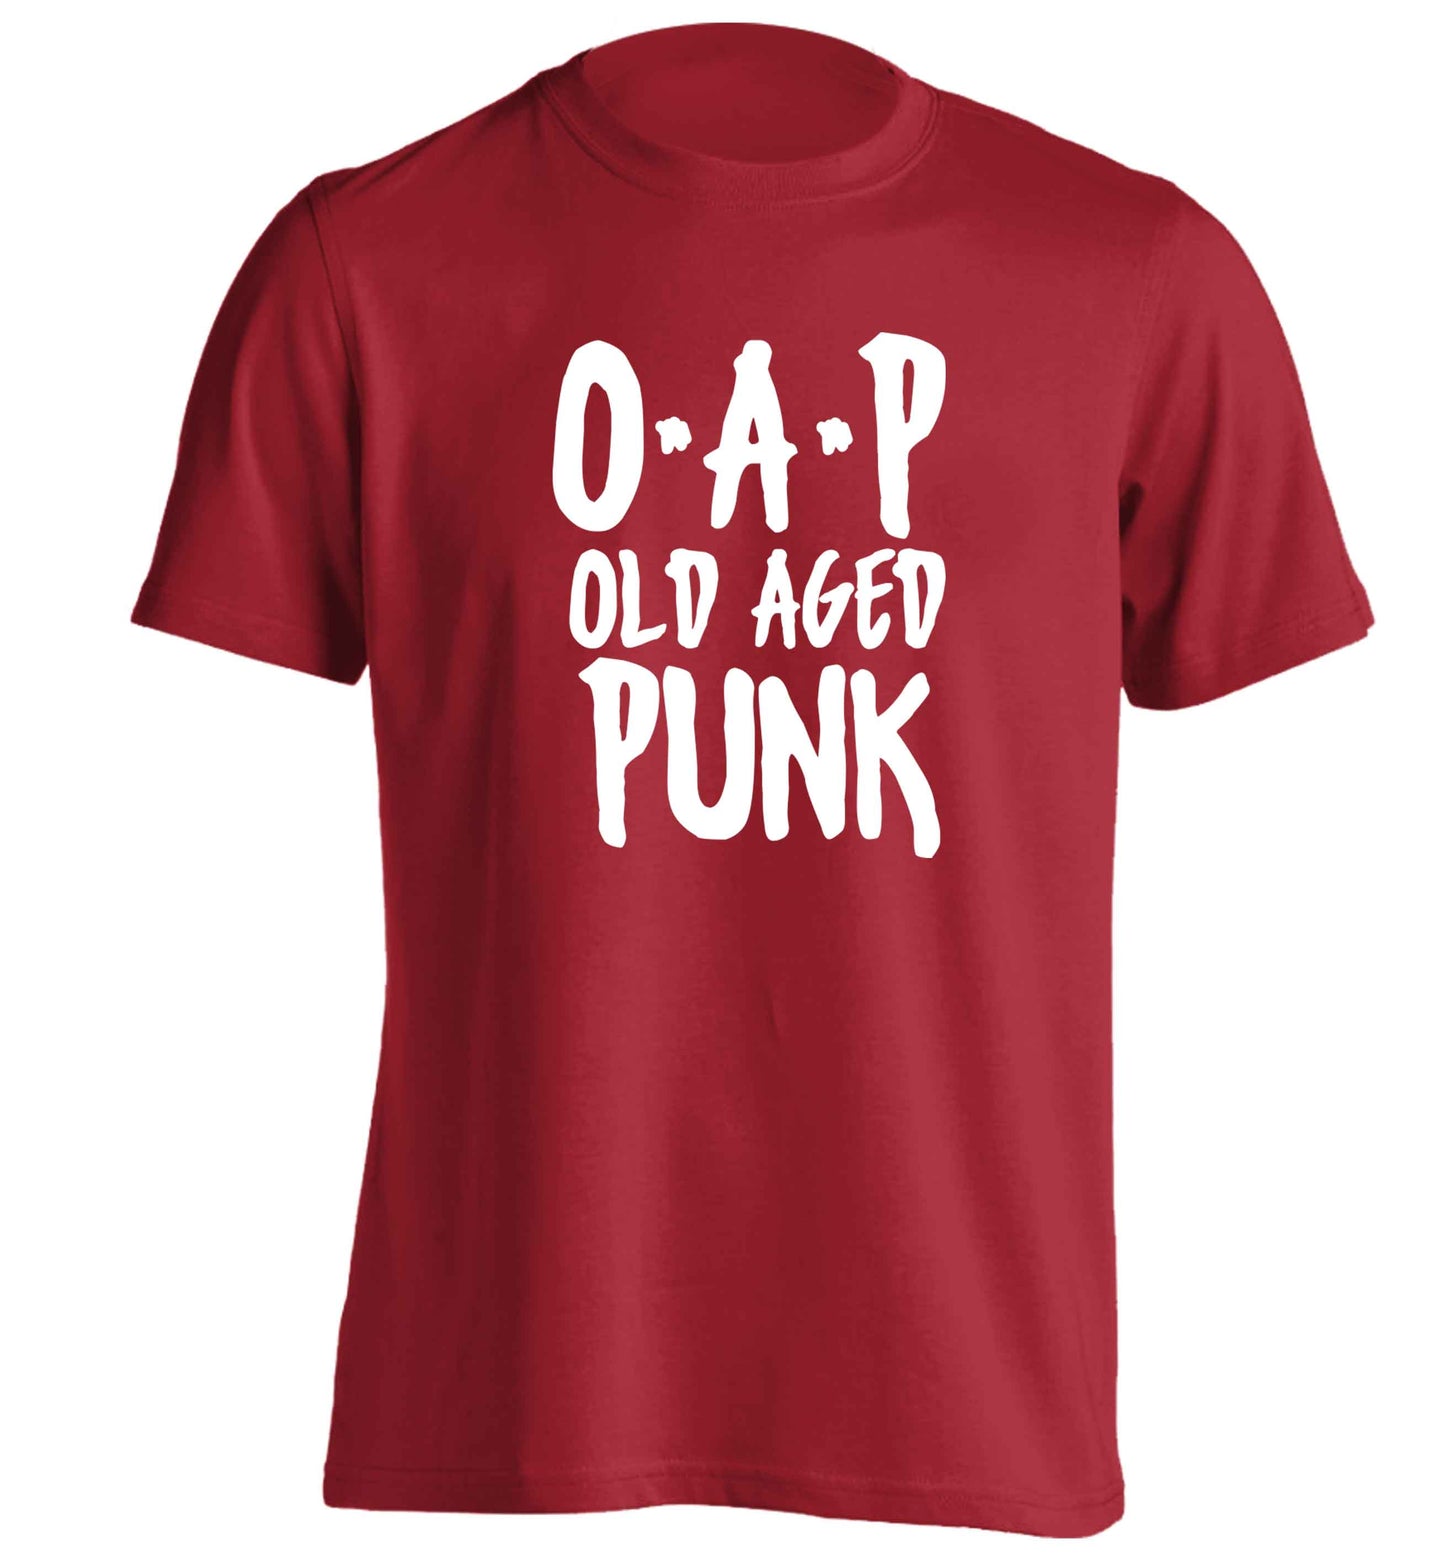 O.A.P Old Age Punk adults unisex red Tshirt 2XL